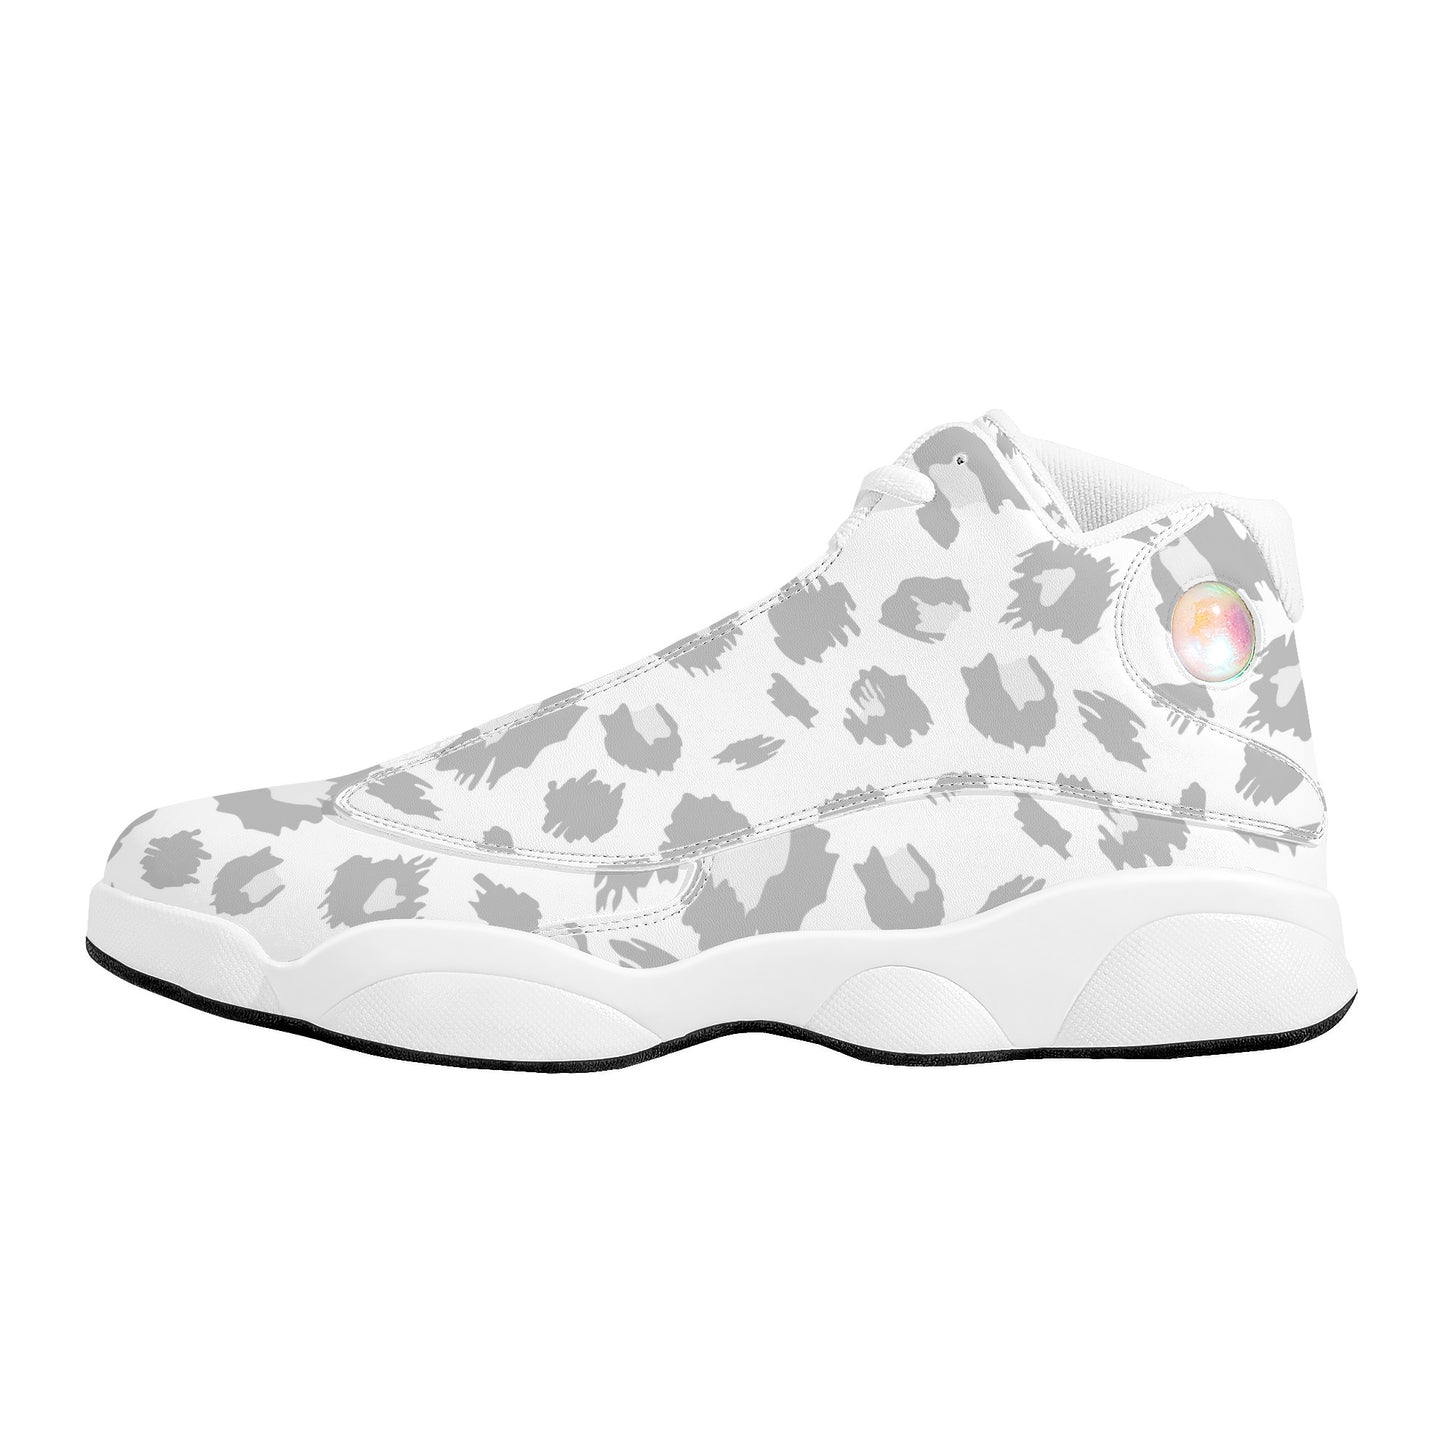 "Nix Jaguar" Basketball Shoes